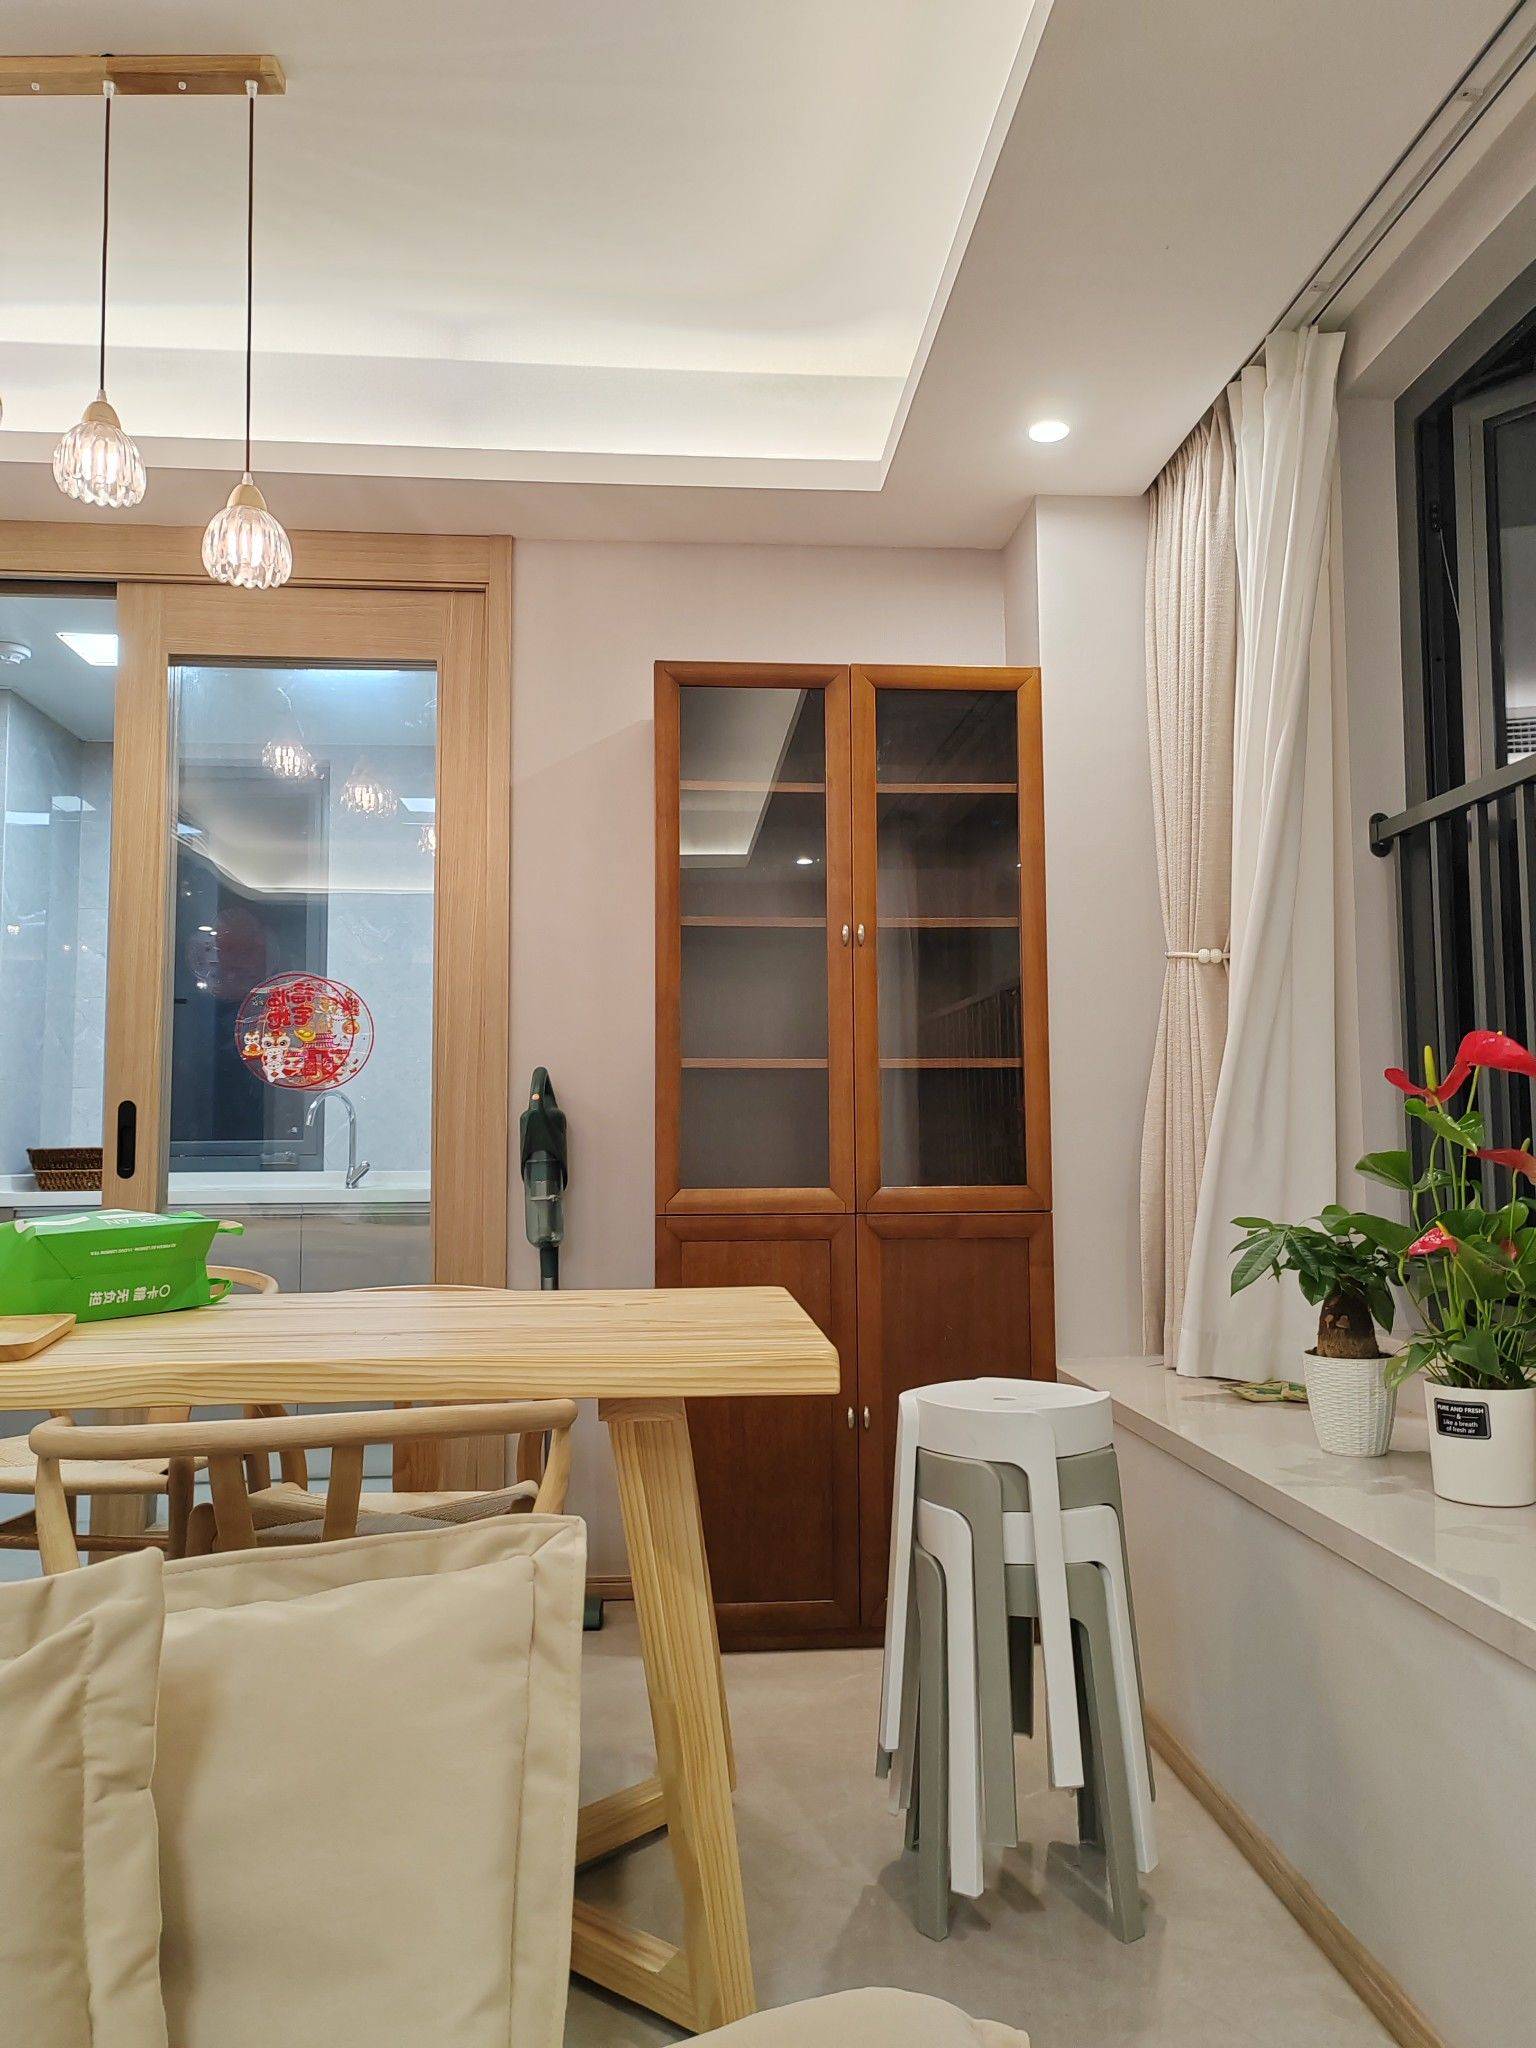 Hangzhou-Xiaoshan-Cozy Home,Clean&Comfy,No Gender Limit,Hustle & Bustle,“Friends”,Chilled,LGBTQ Friendly,Pet Friendly